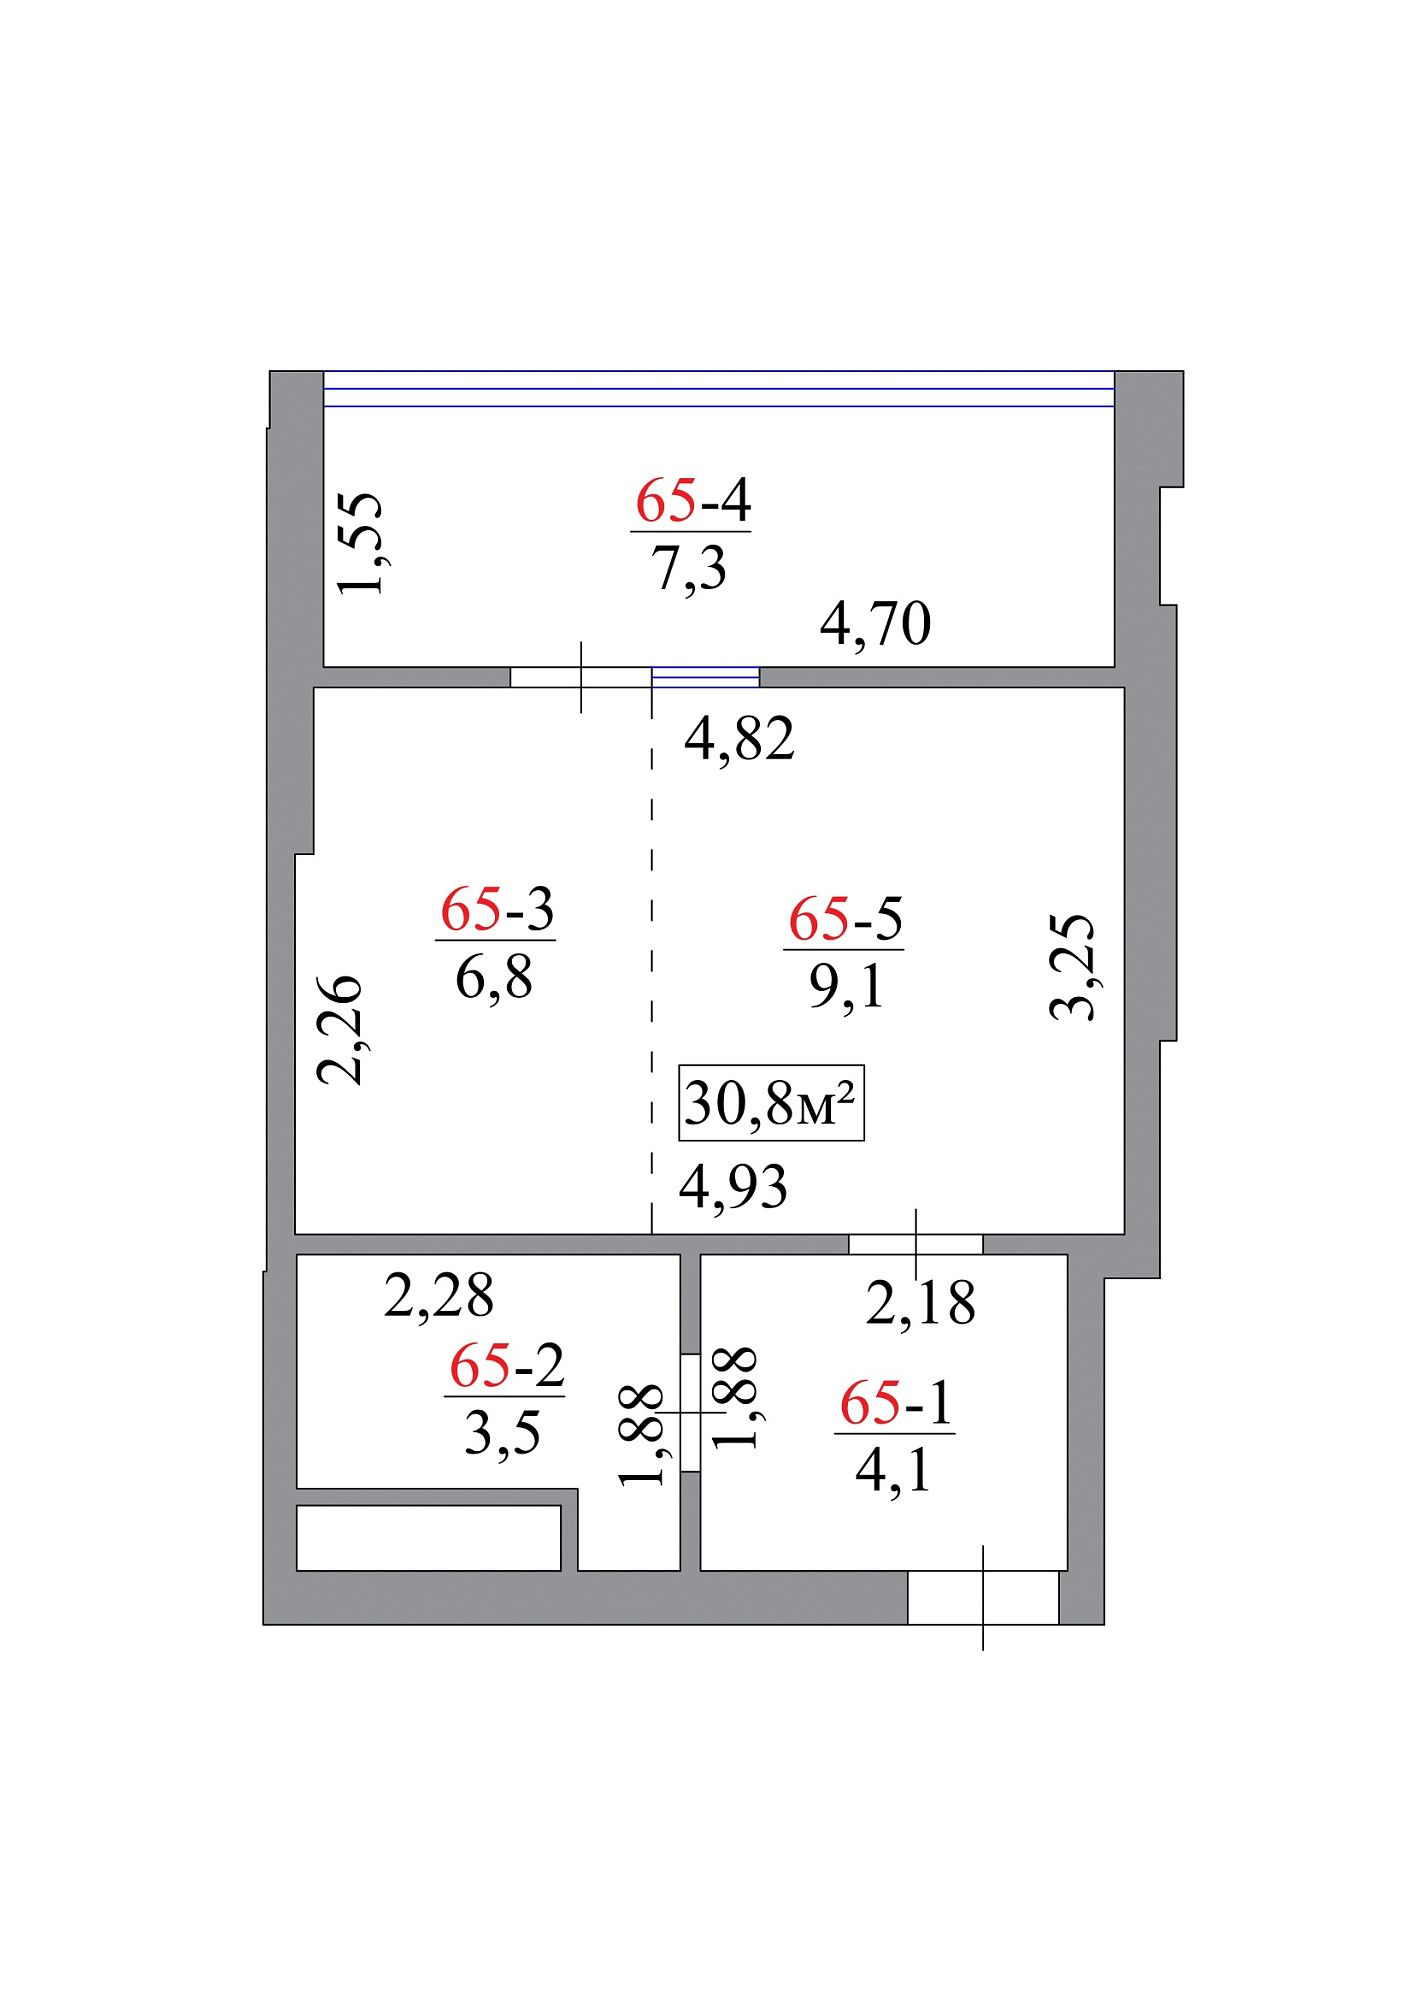 Planning Smart flats area 30.8m2, AB-07-07/00059.